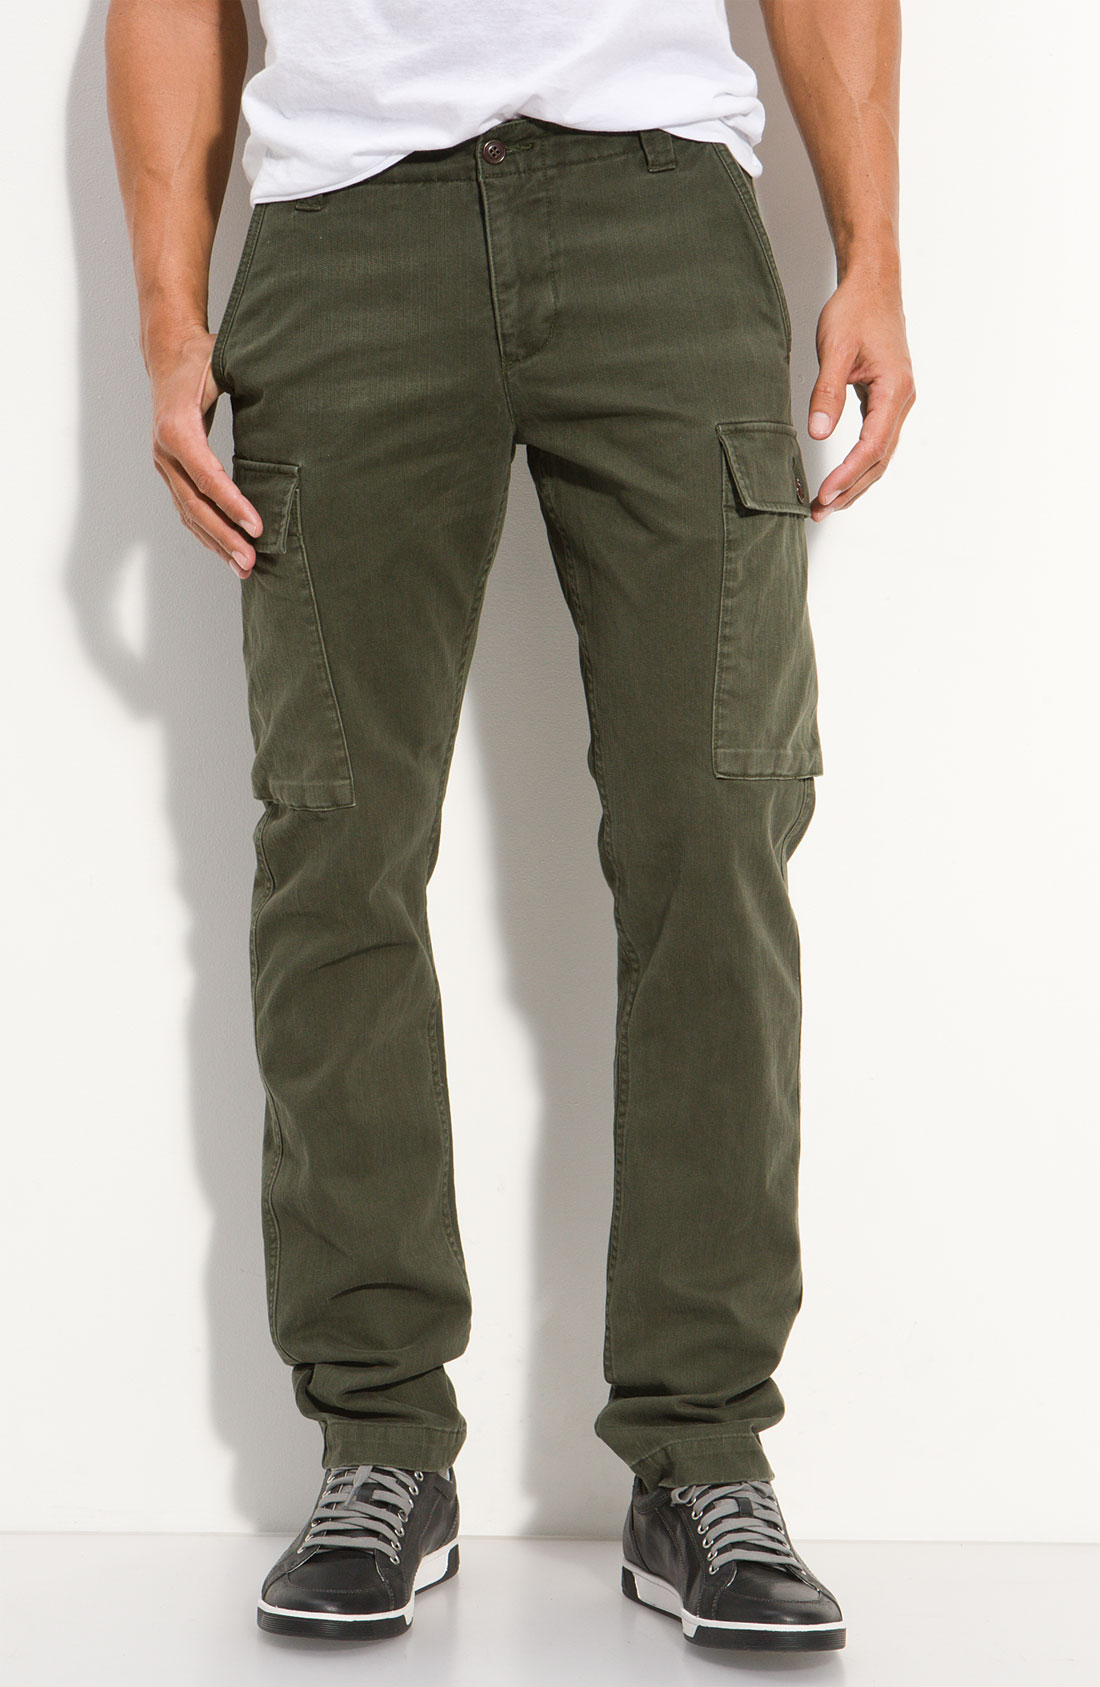 Green Slim Fit Cargo Pants | Pant So